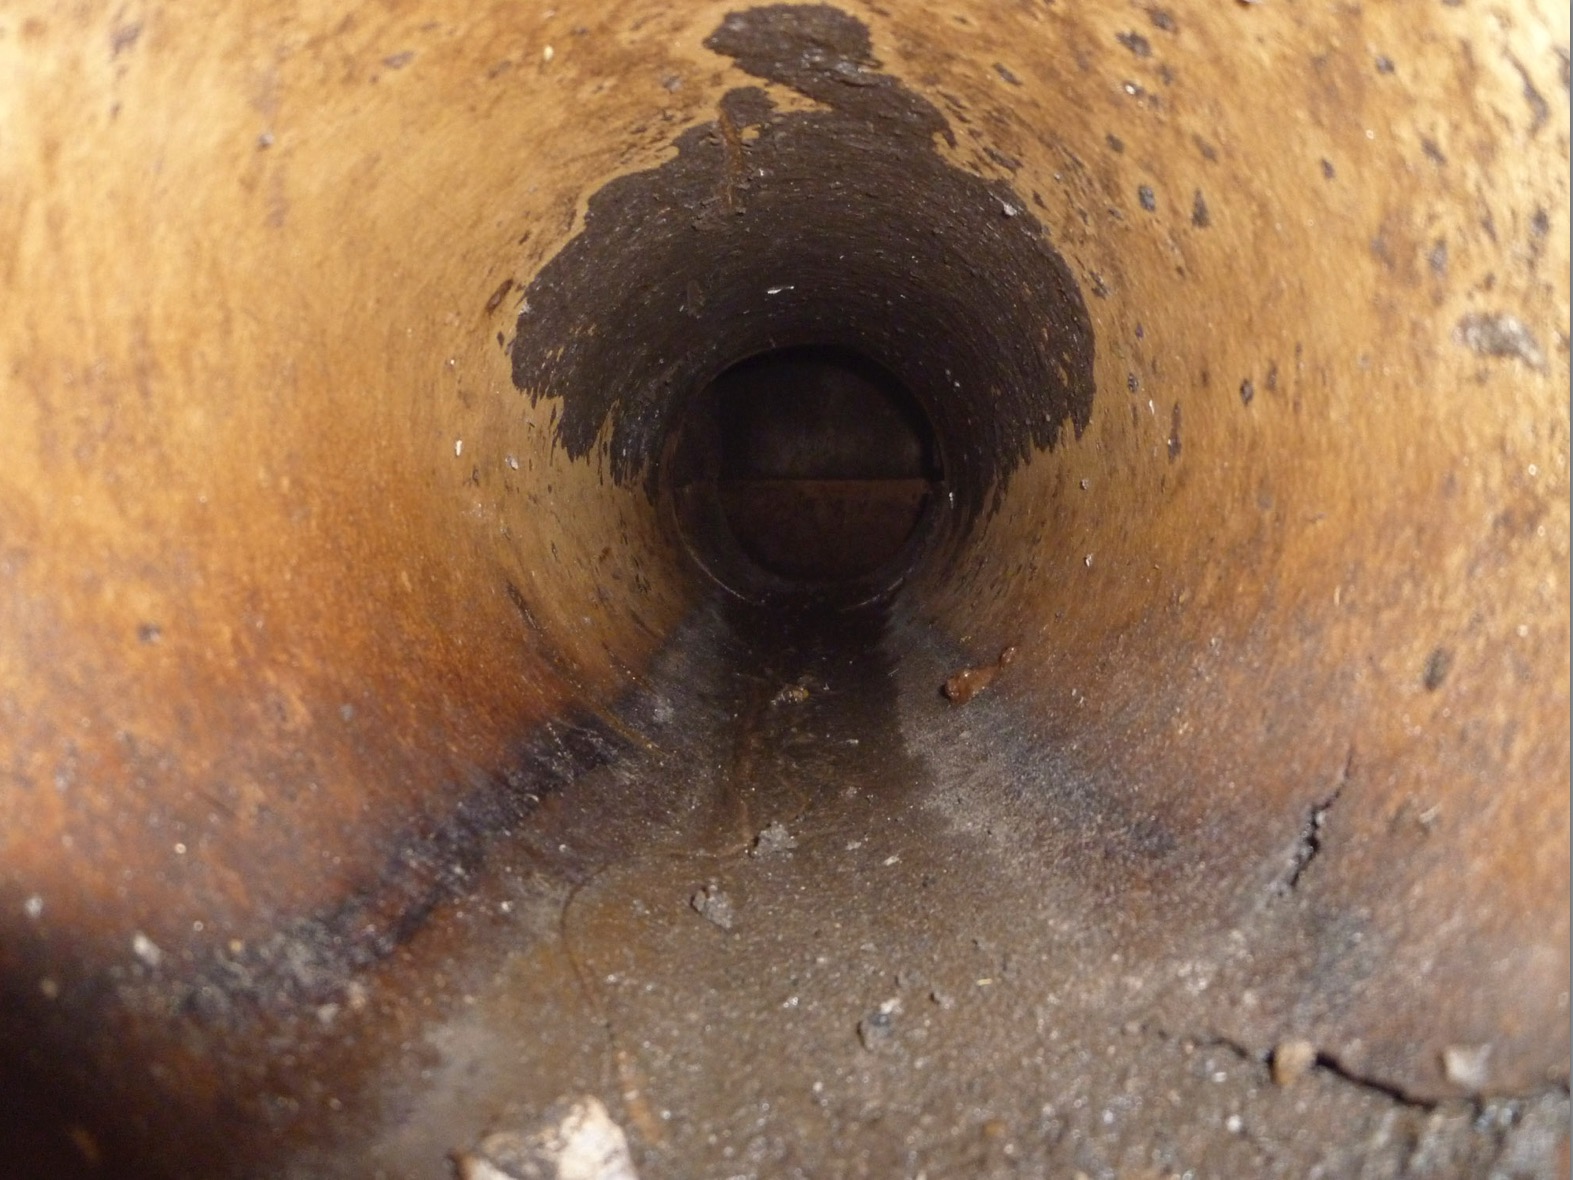 Inside Clay pipe embedded in brick wall - peering into sewer.jpg